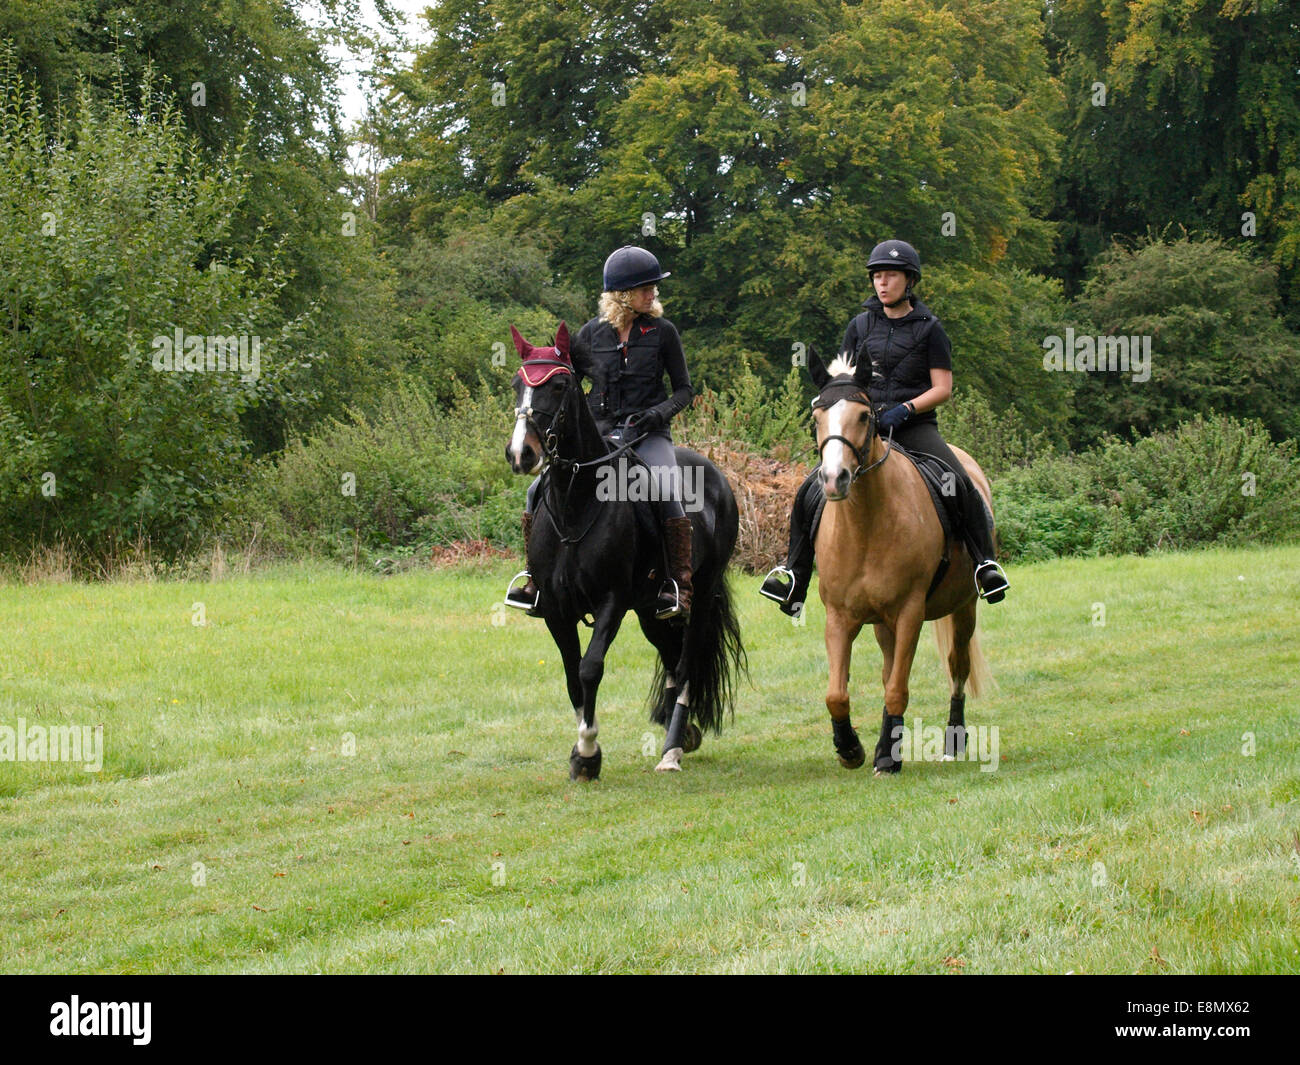 Two women horse riding together, Chettle, Dorset, UK Stock Photo